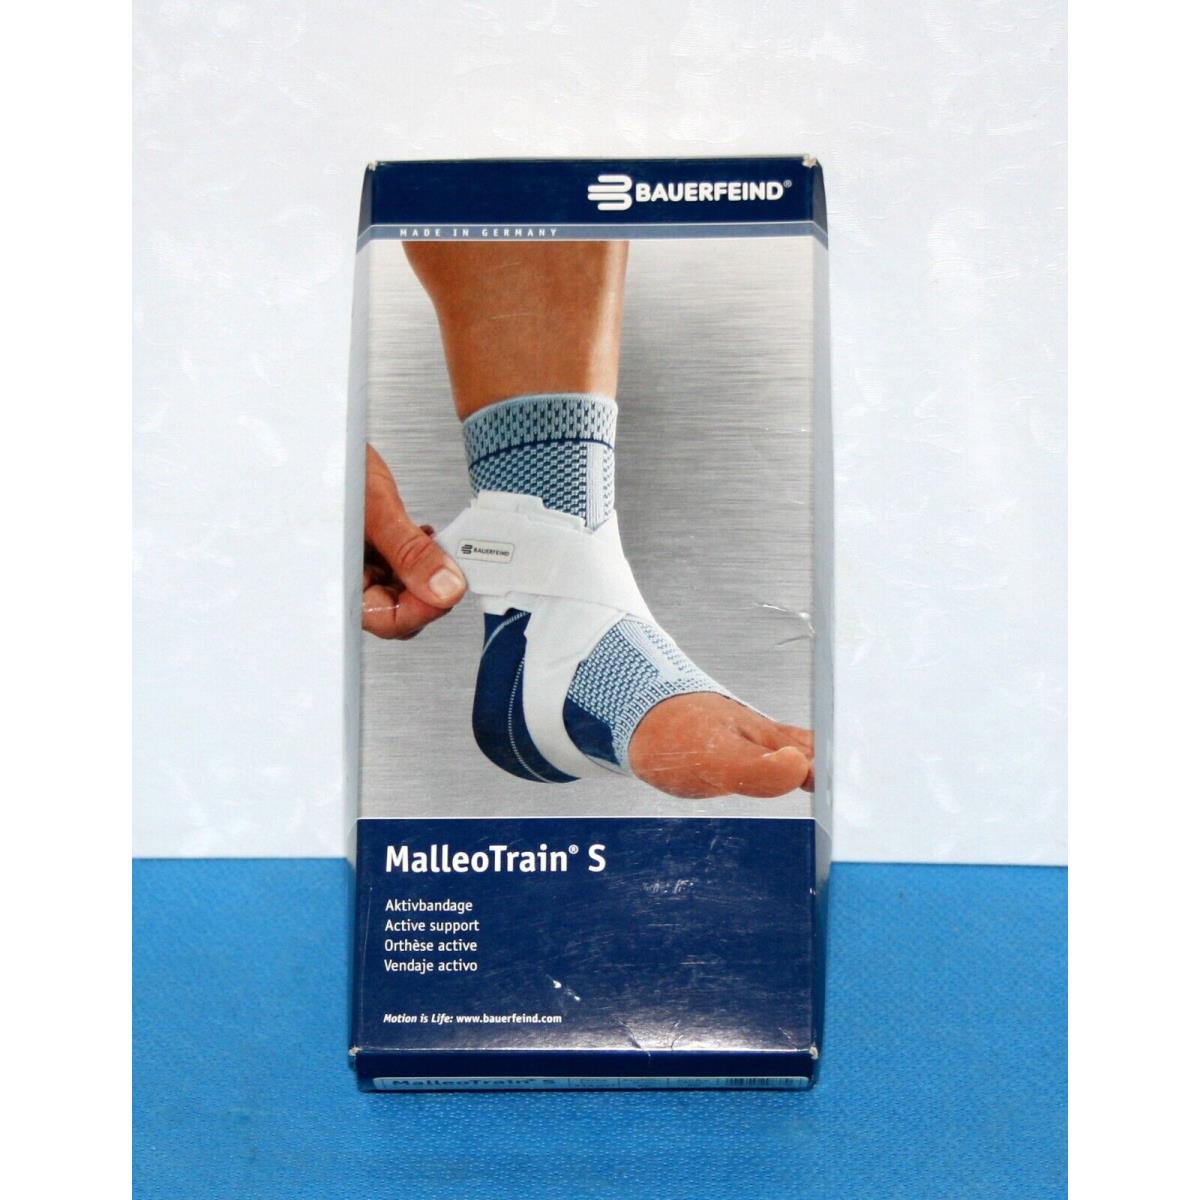 Bauerfeind Malleotrain S Ankle Brace - Right Foot - Size 5 - Color Titan